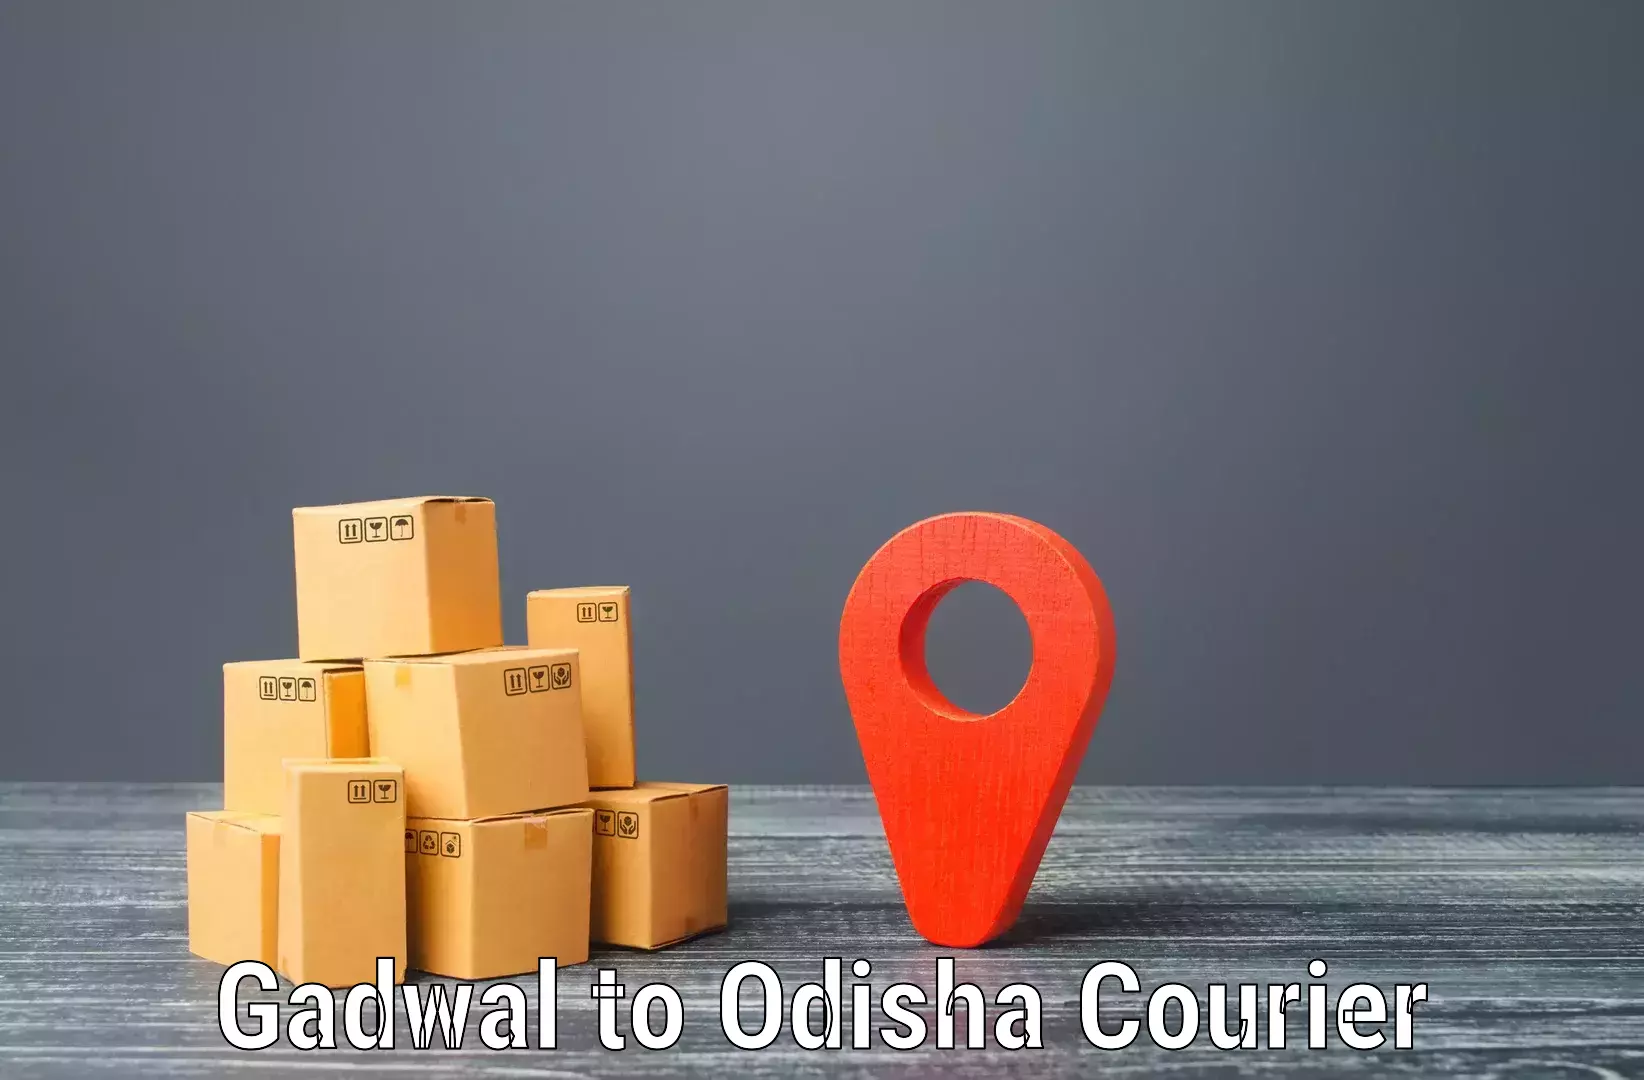 Logistics service provider Gadwal to Badamba